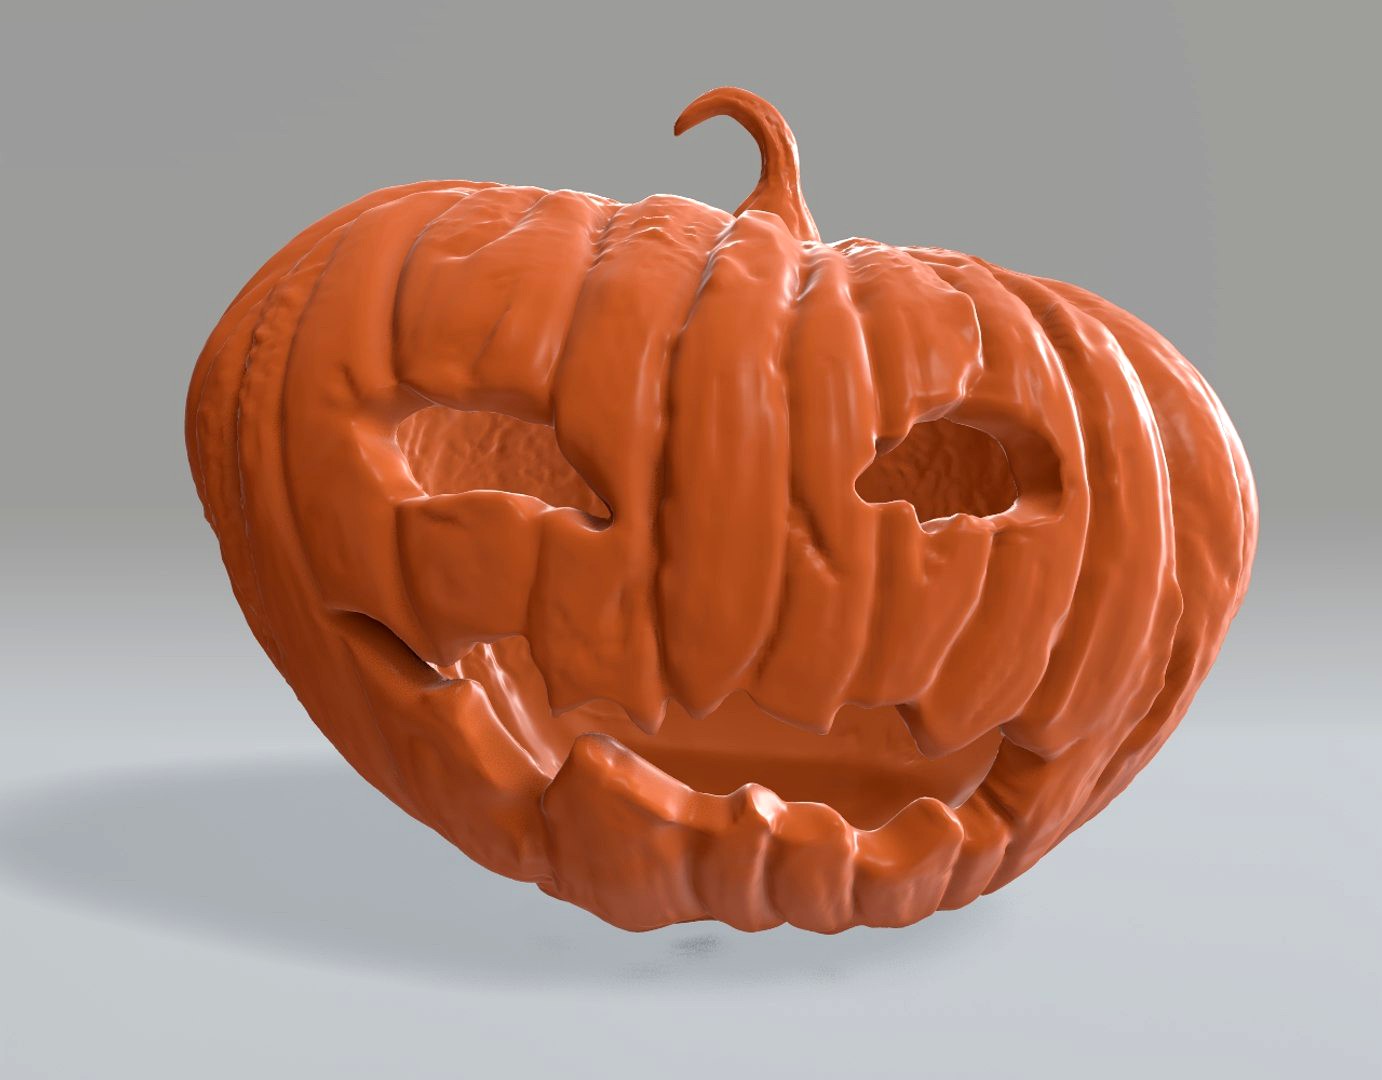 Lamp Jack. Pumpkin on Halloween. Suitable for 3D printing